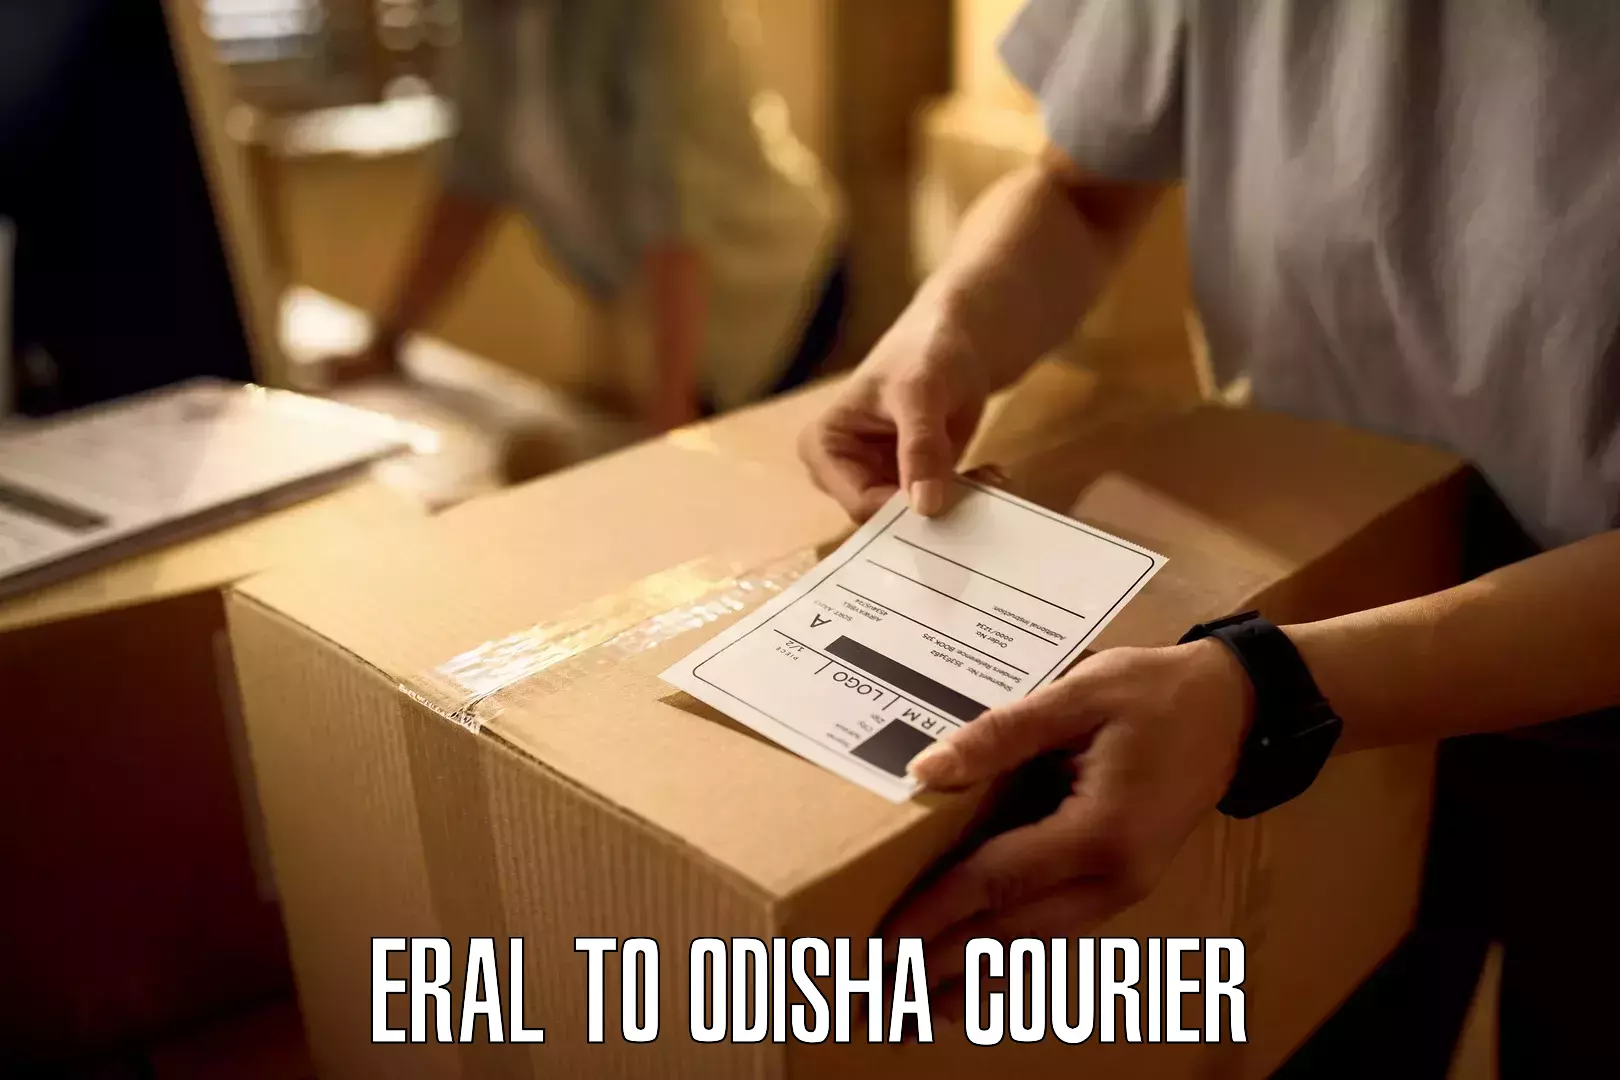 Local delivery service Eral to Odisha